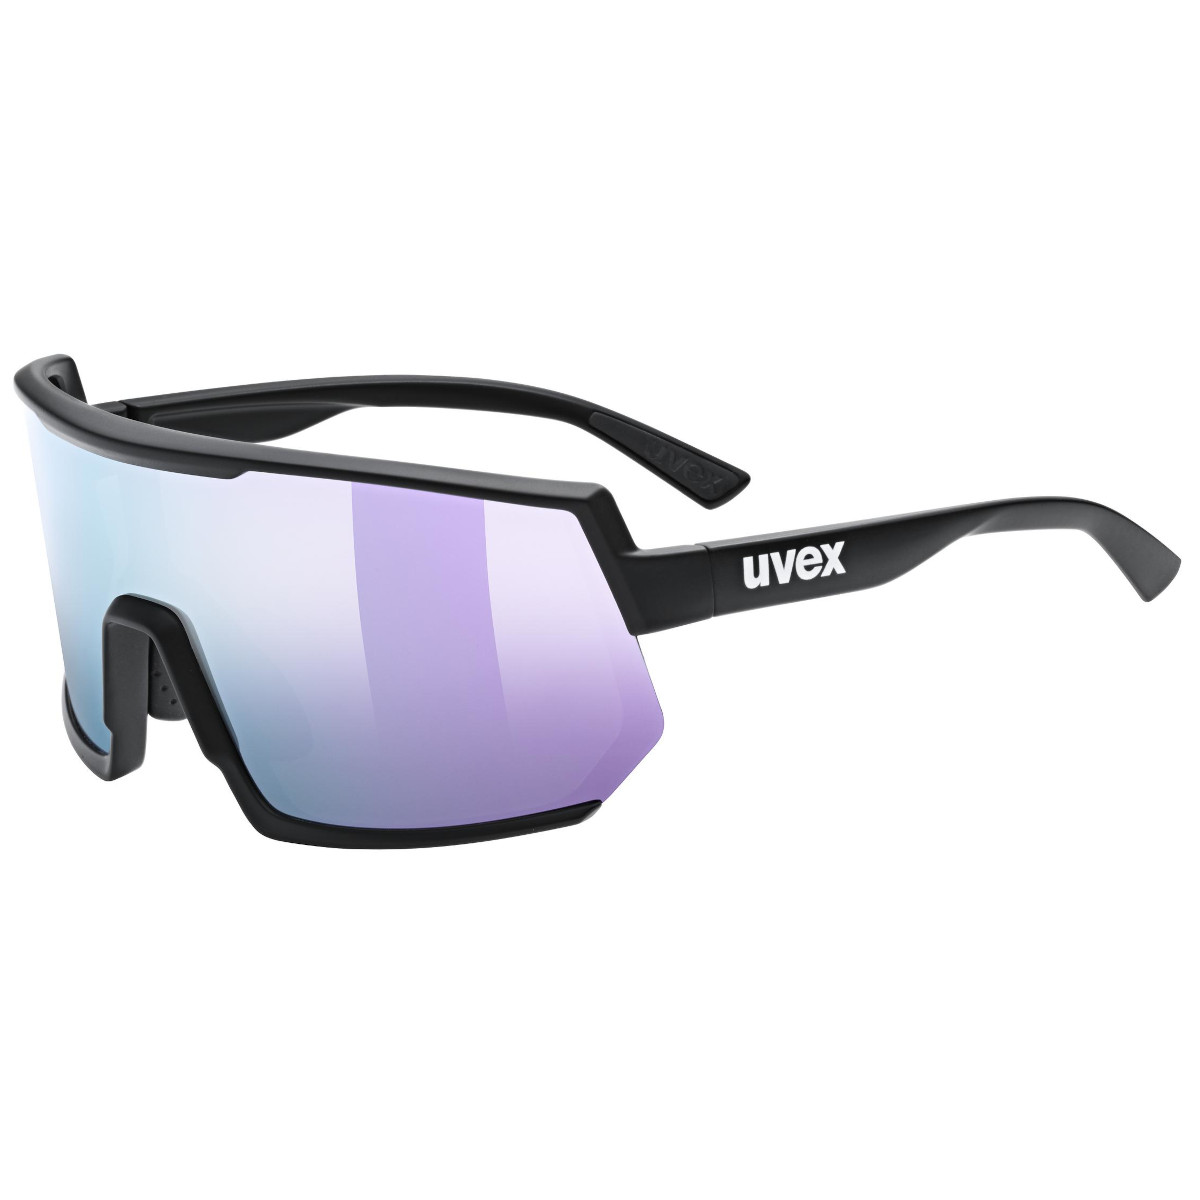 Productfoto van Uvex sportstyle 235 Bril - black matt/mirror lavender